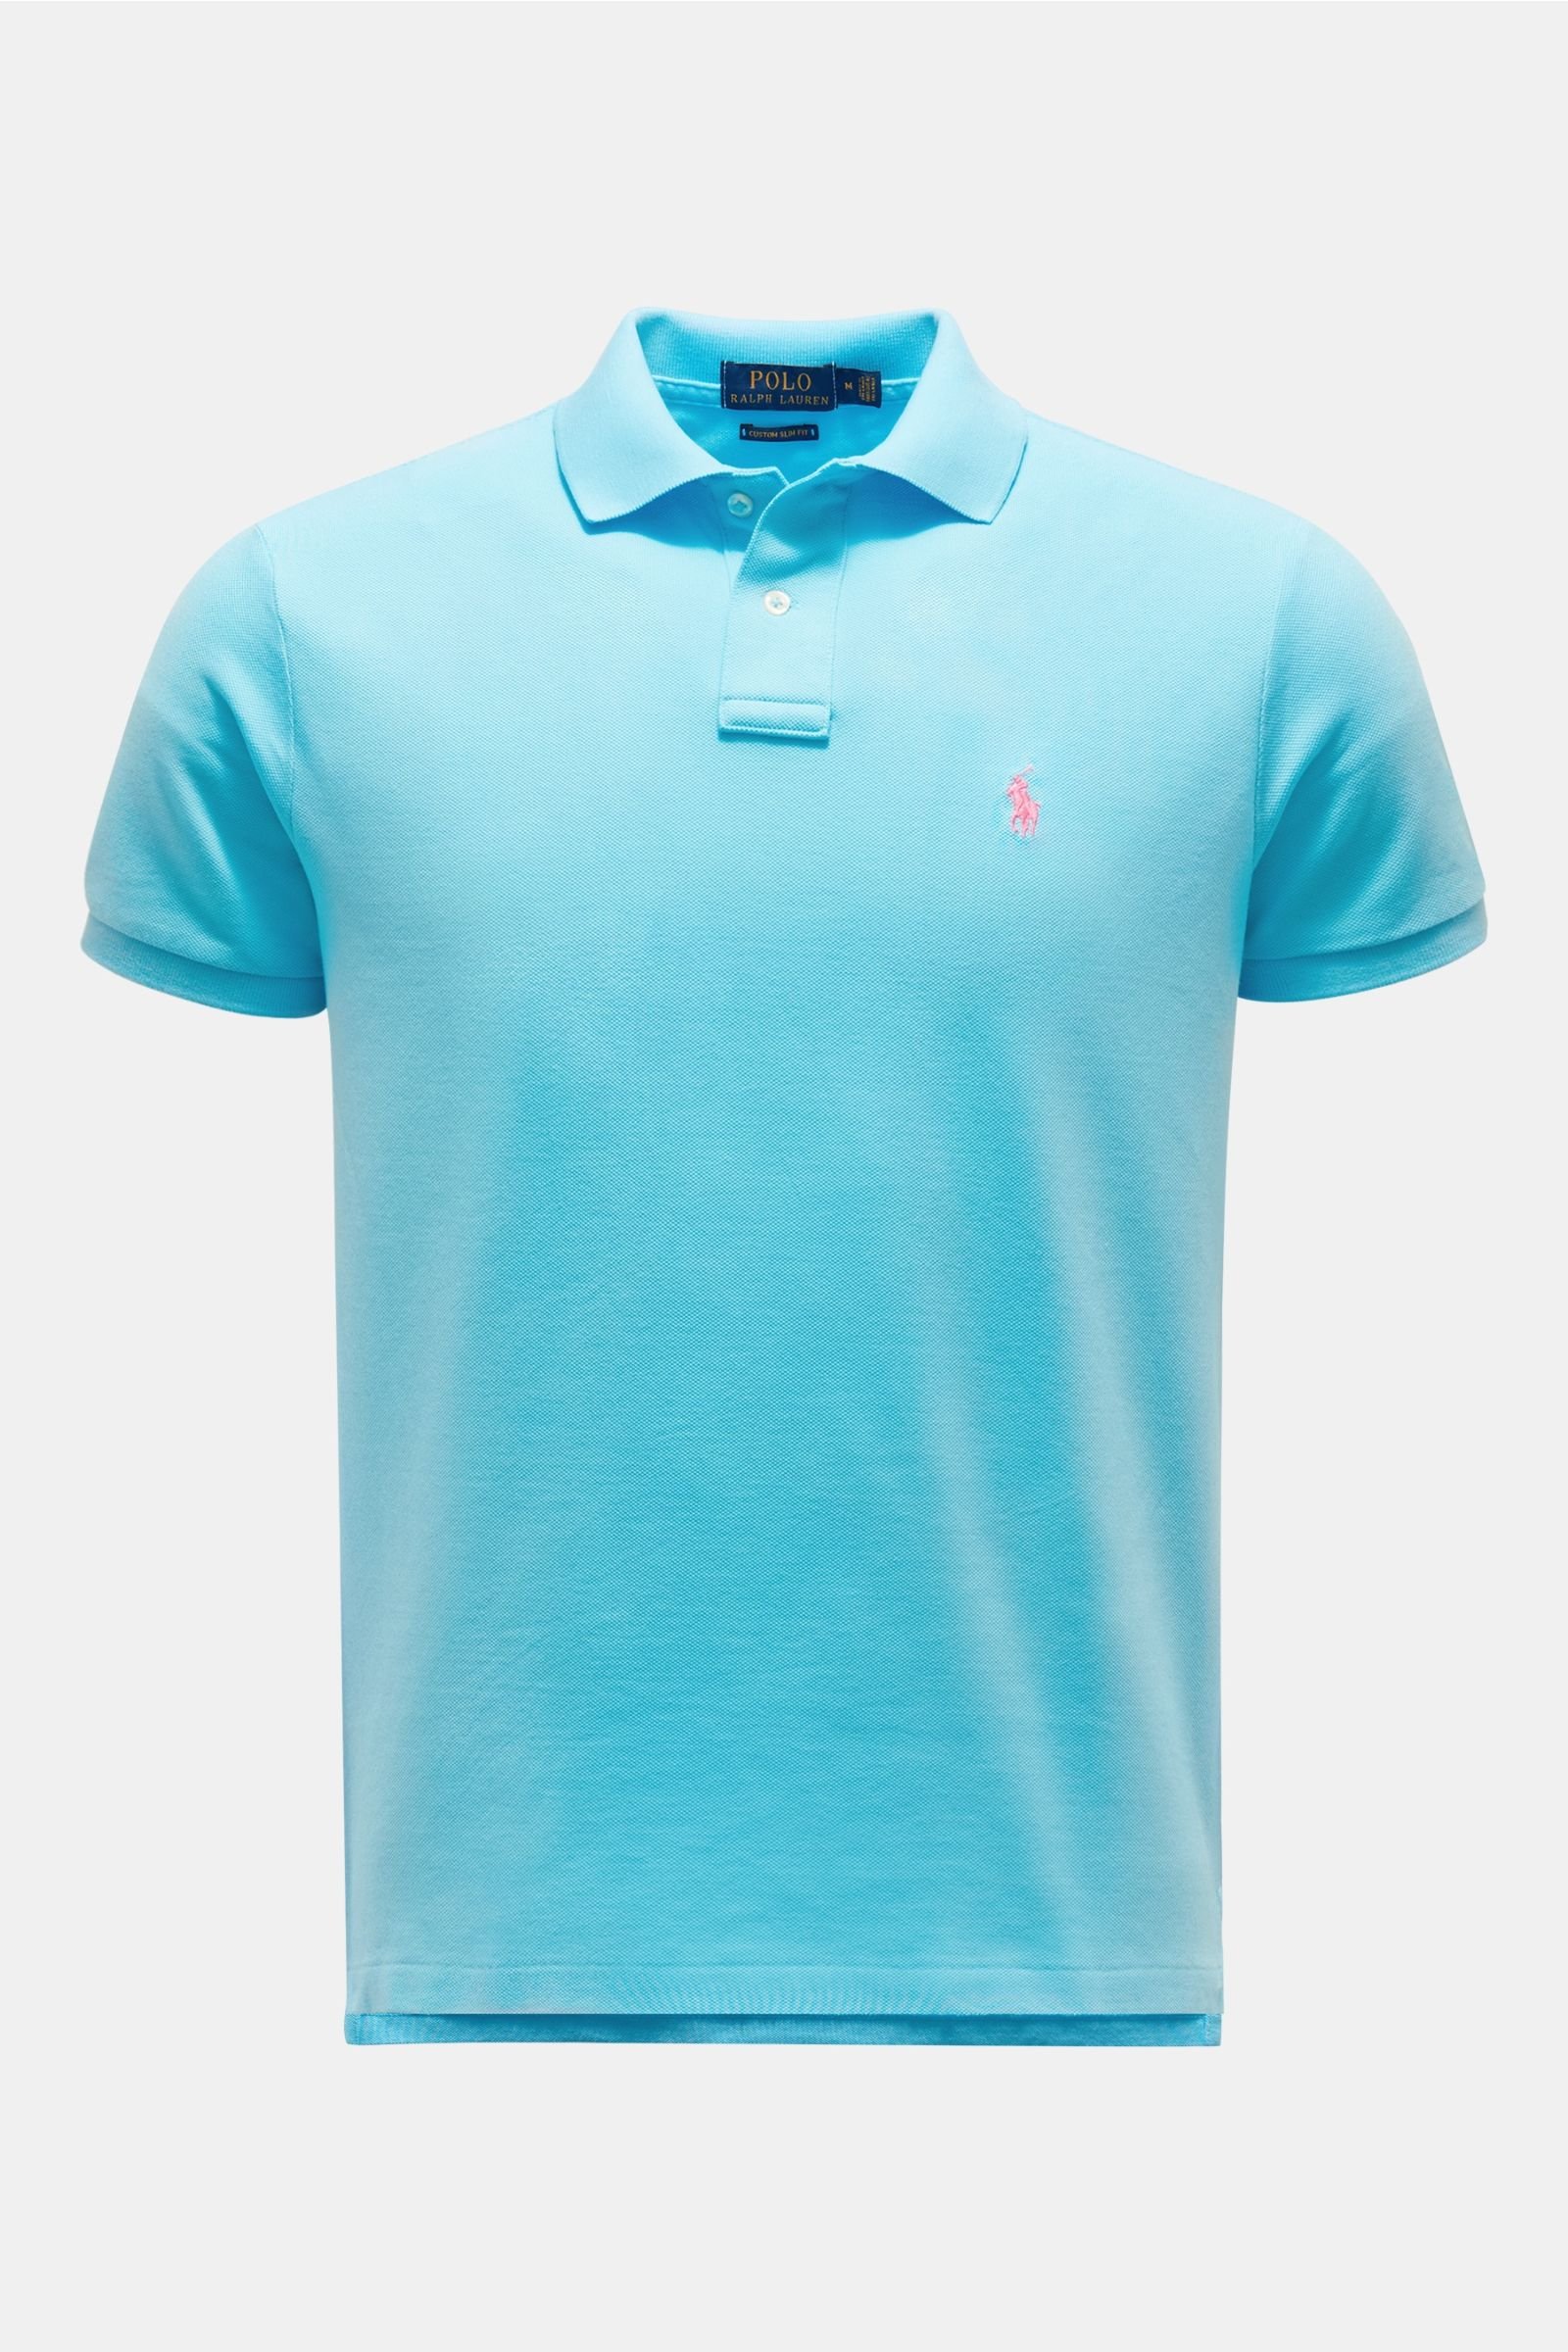 Polo shirt turquoise